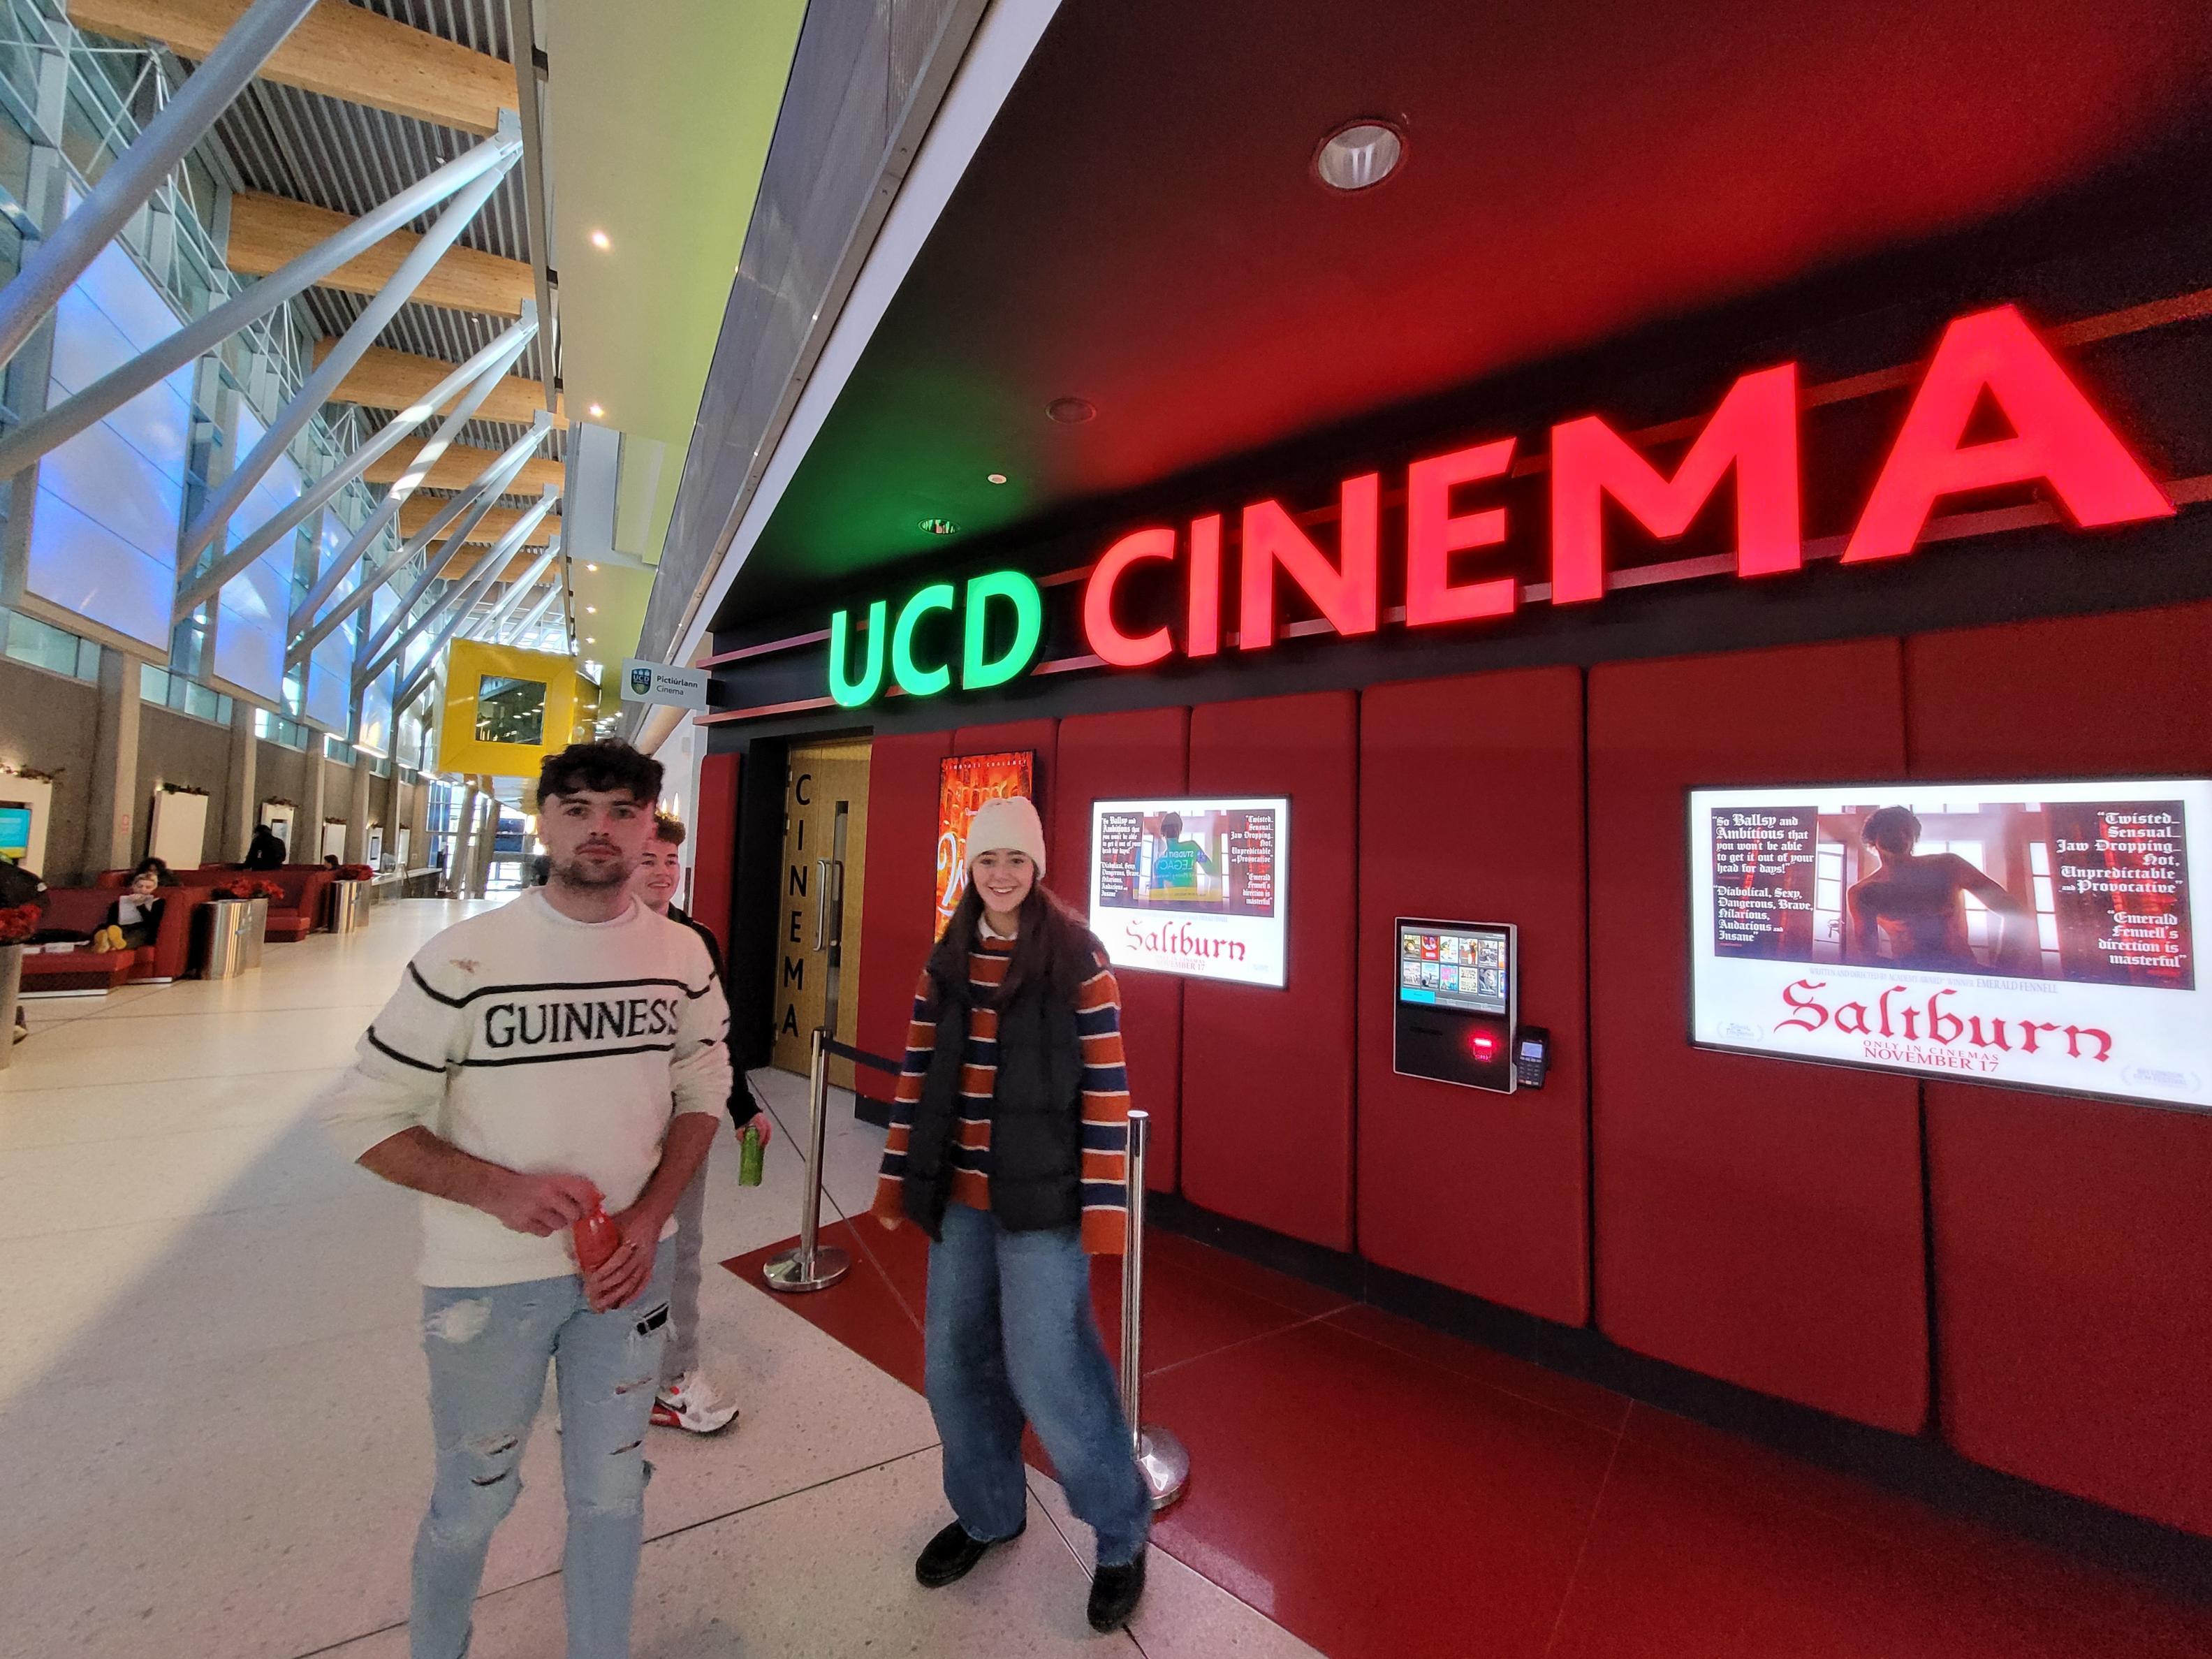 UCD Cinema